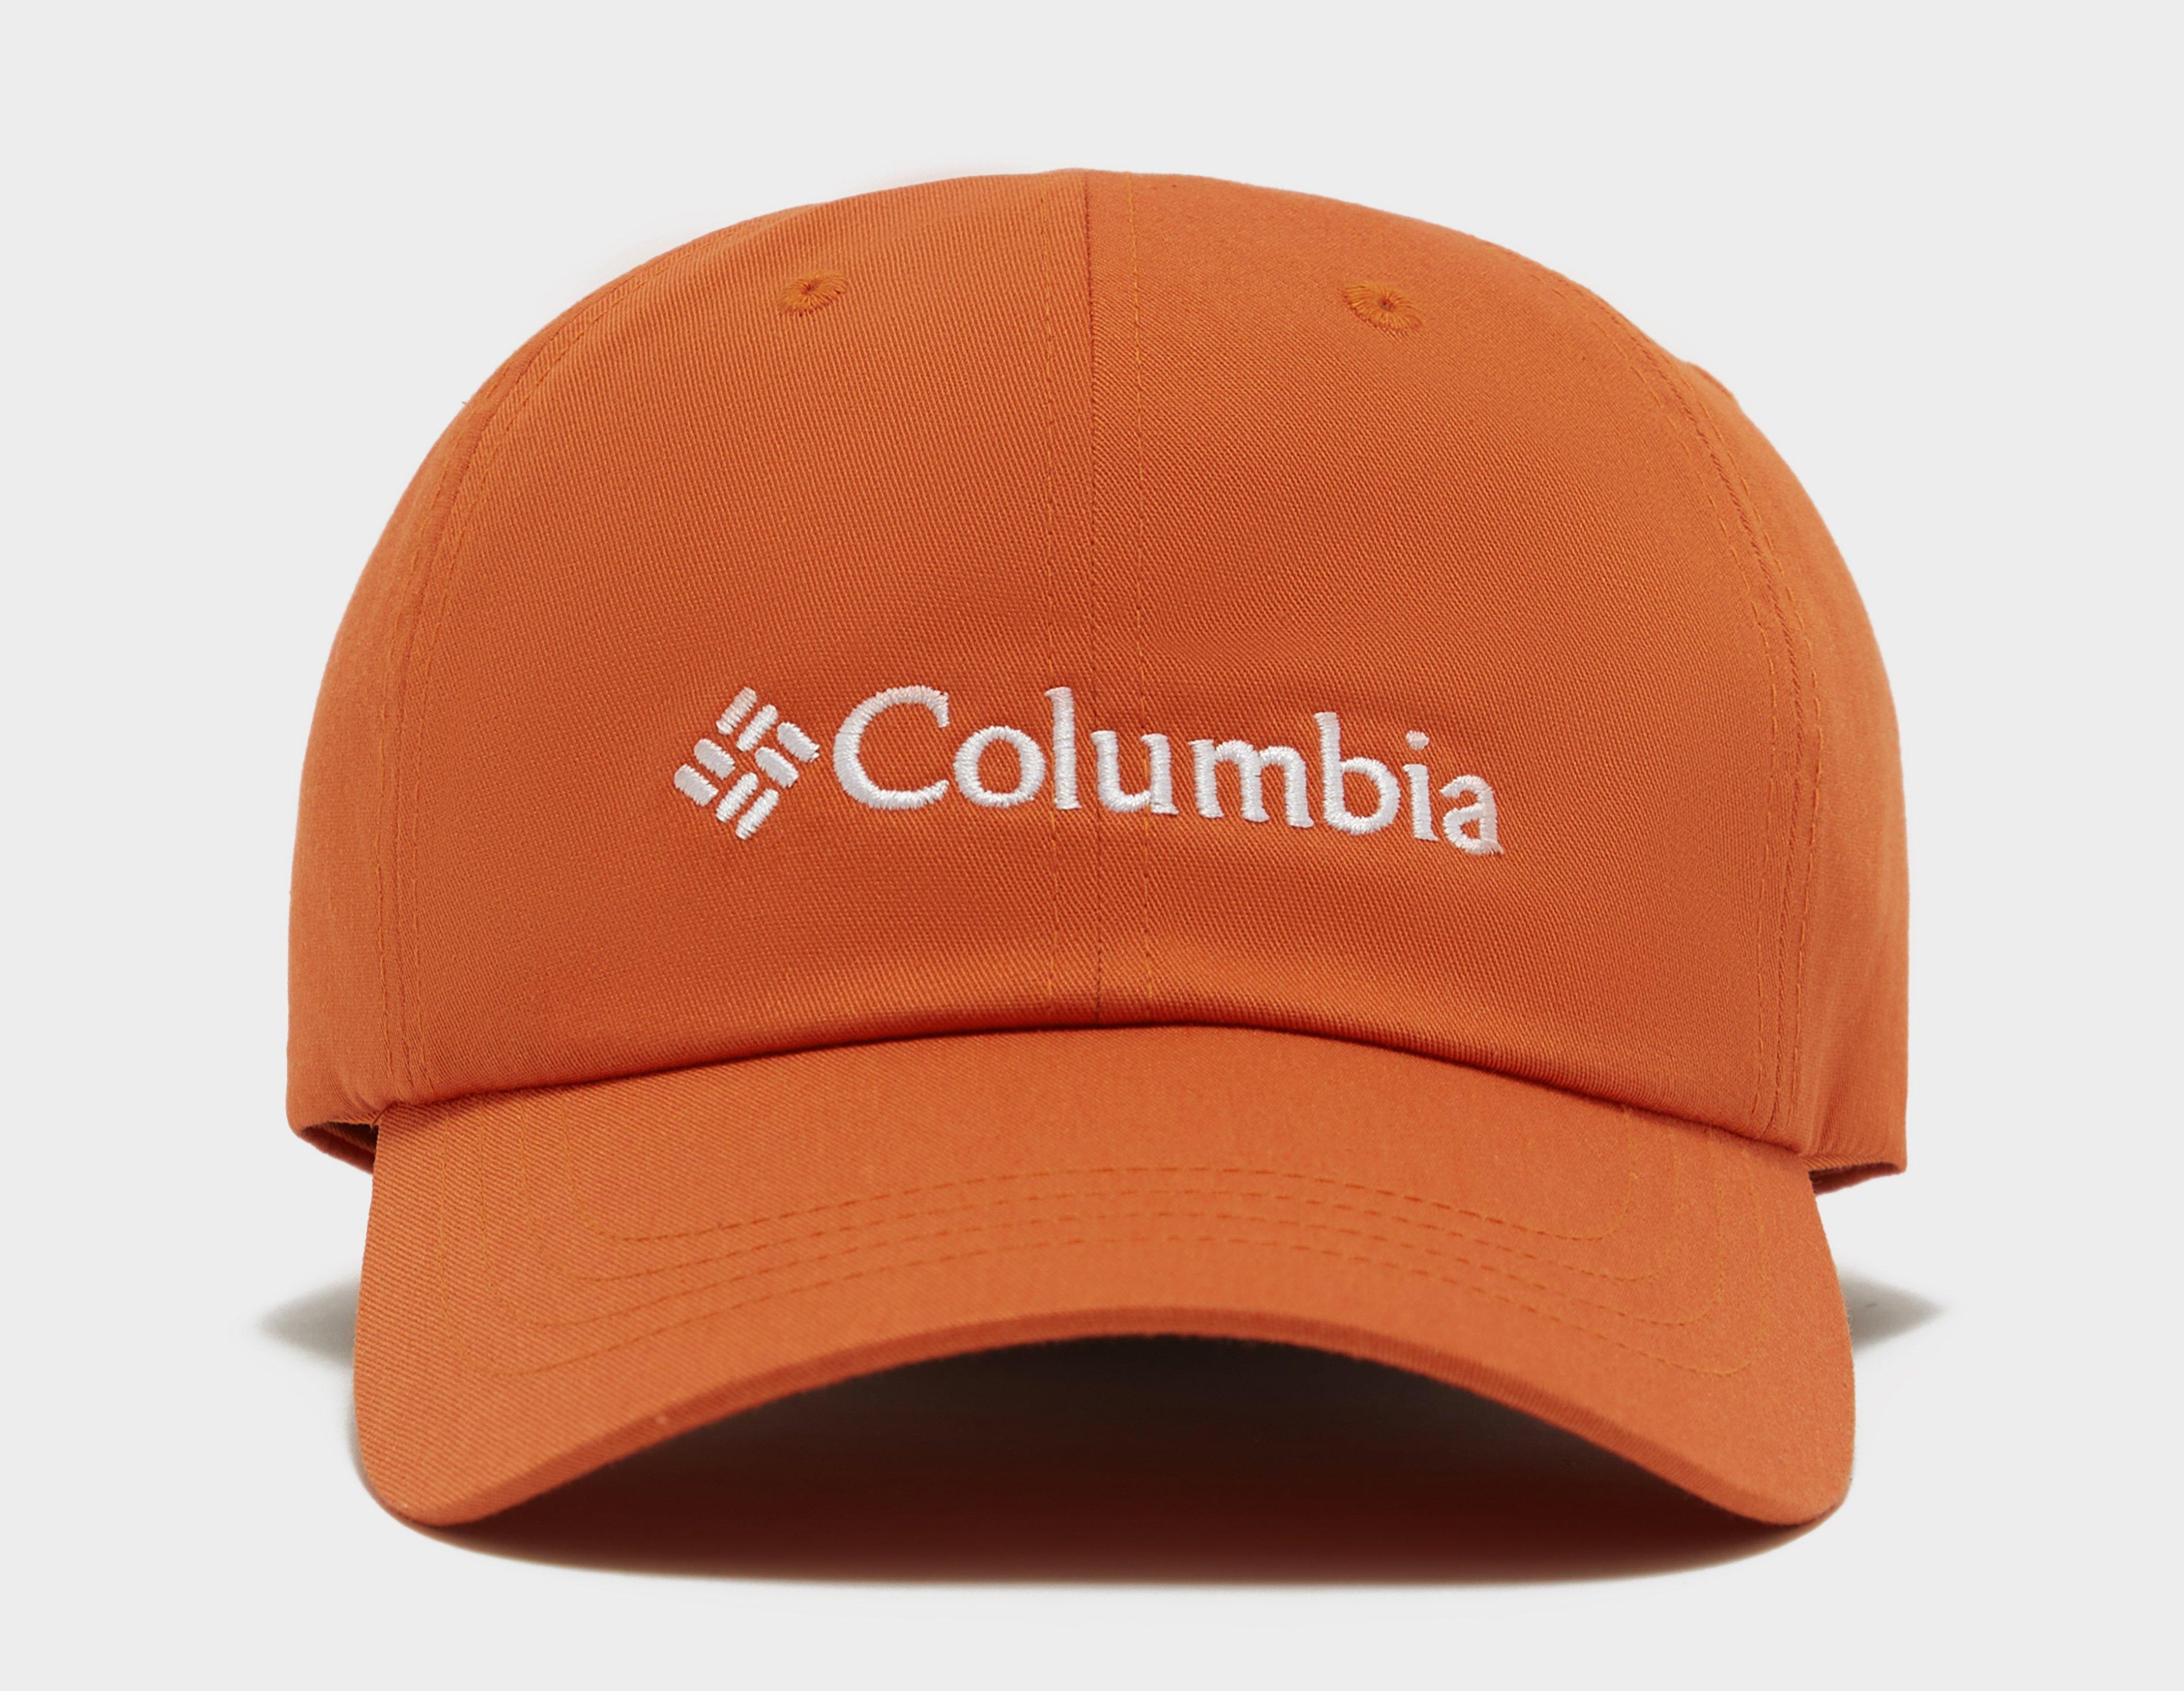 Hermès pre-owned fedora hat | Healthdesign? Orange Cap Logo | ROC Columbia